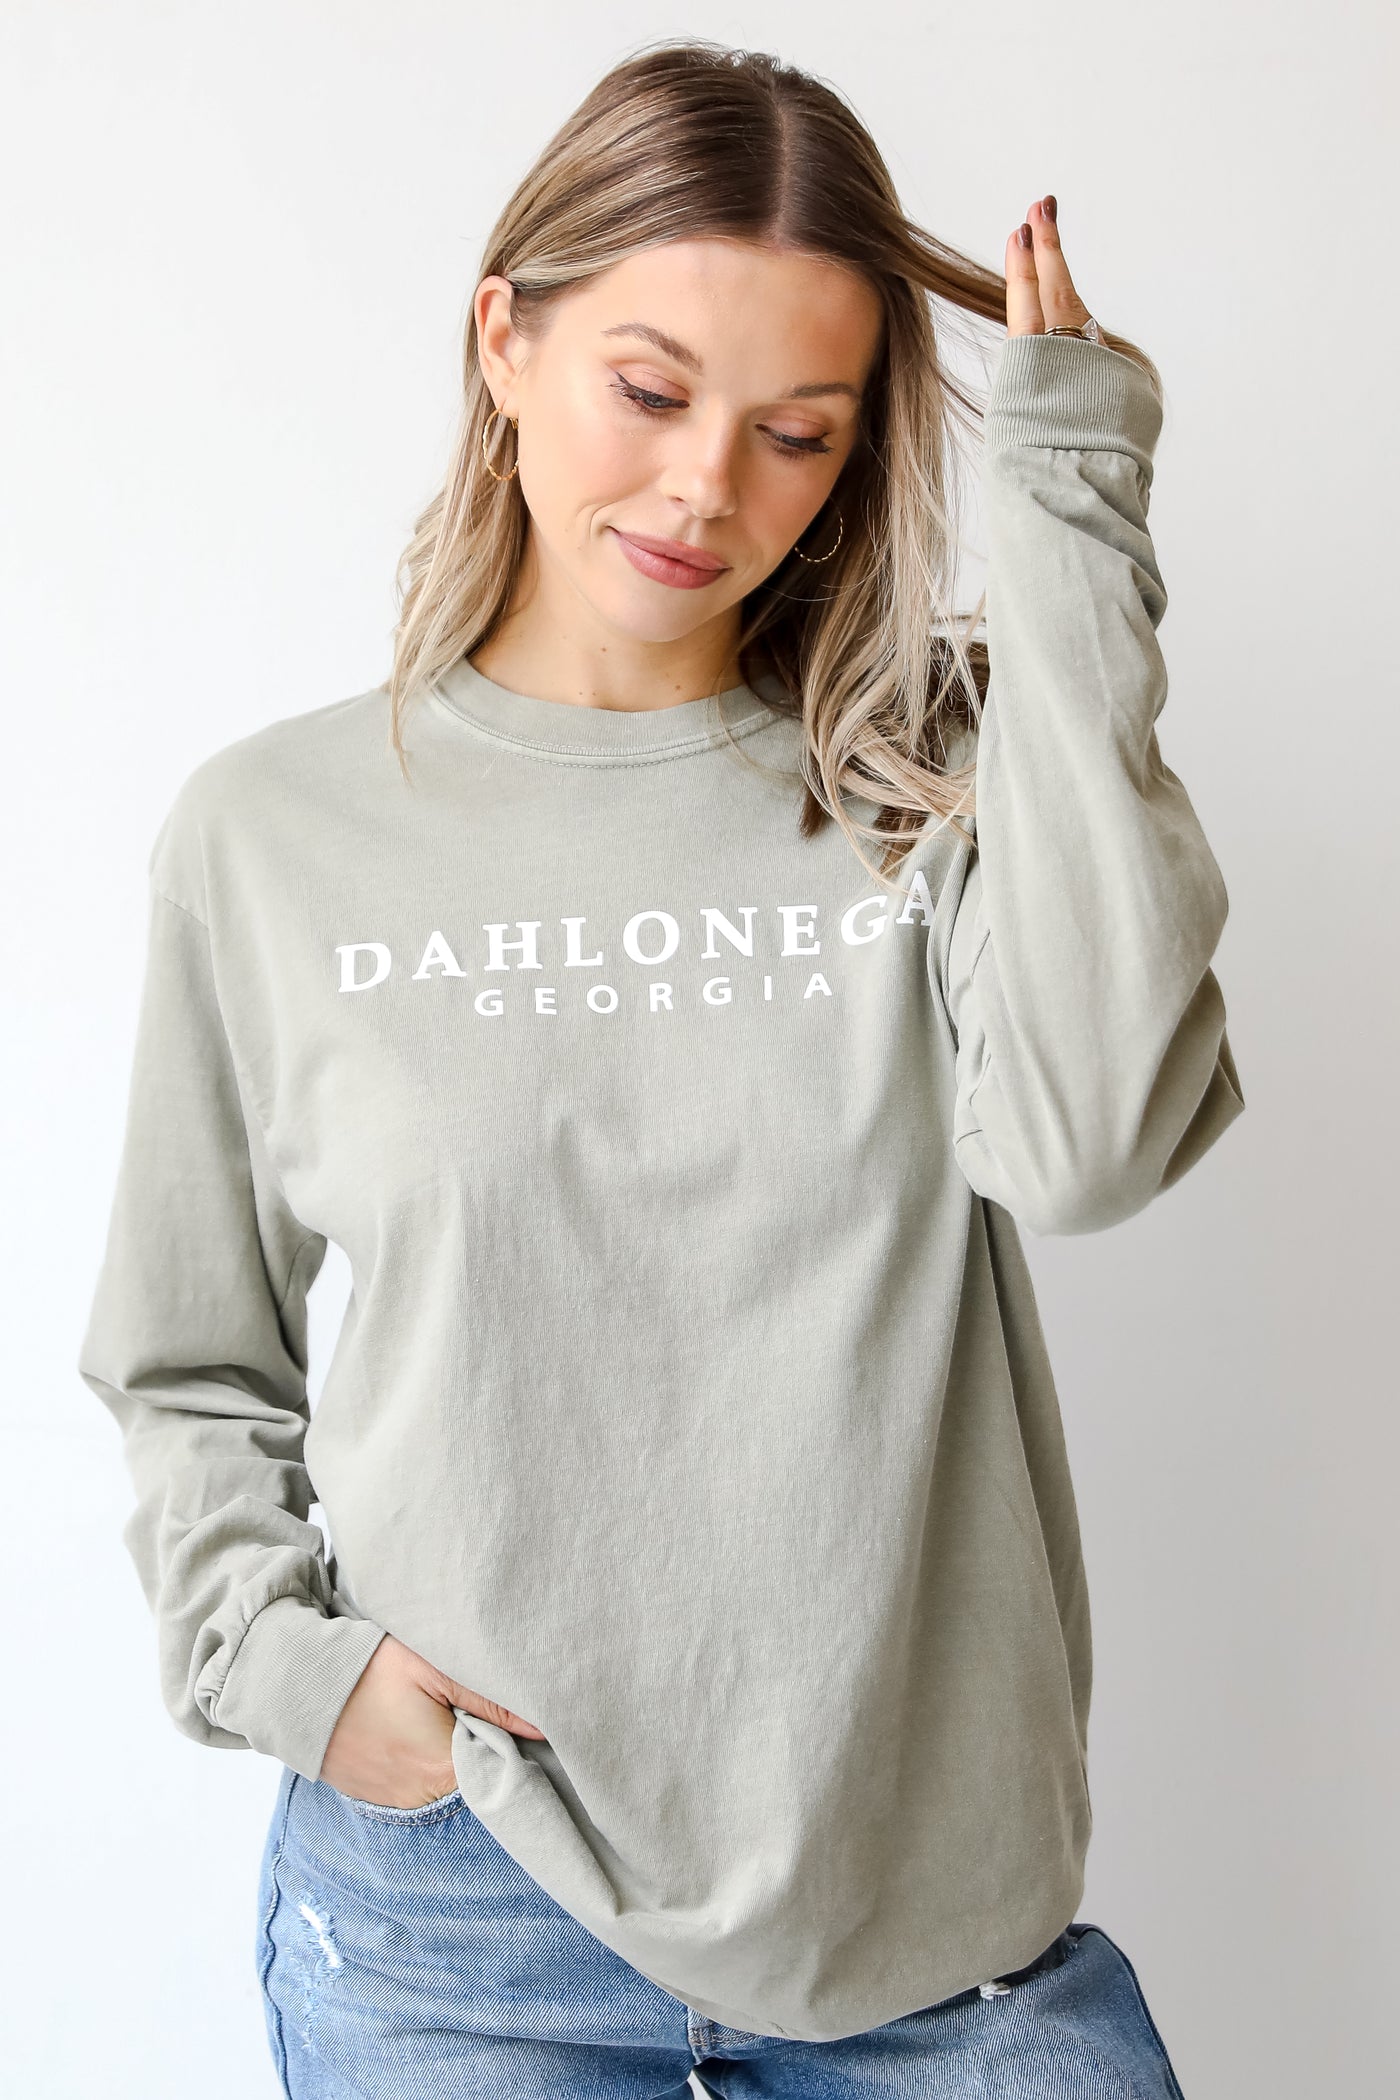 Olive Dahlonega Georgia Long Sleeve Tee on model